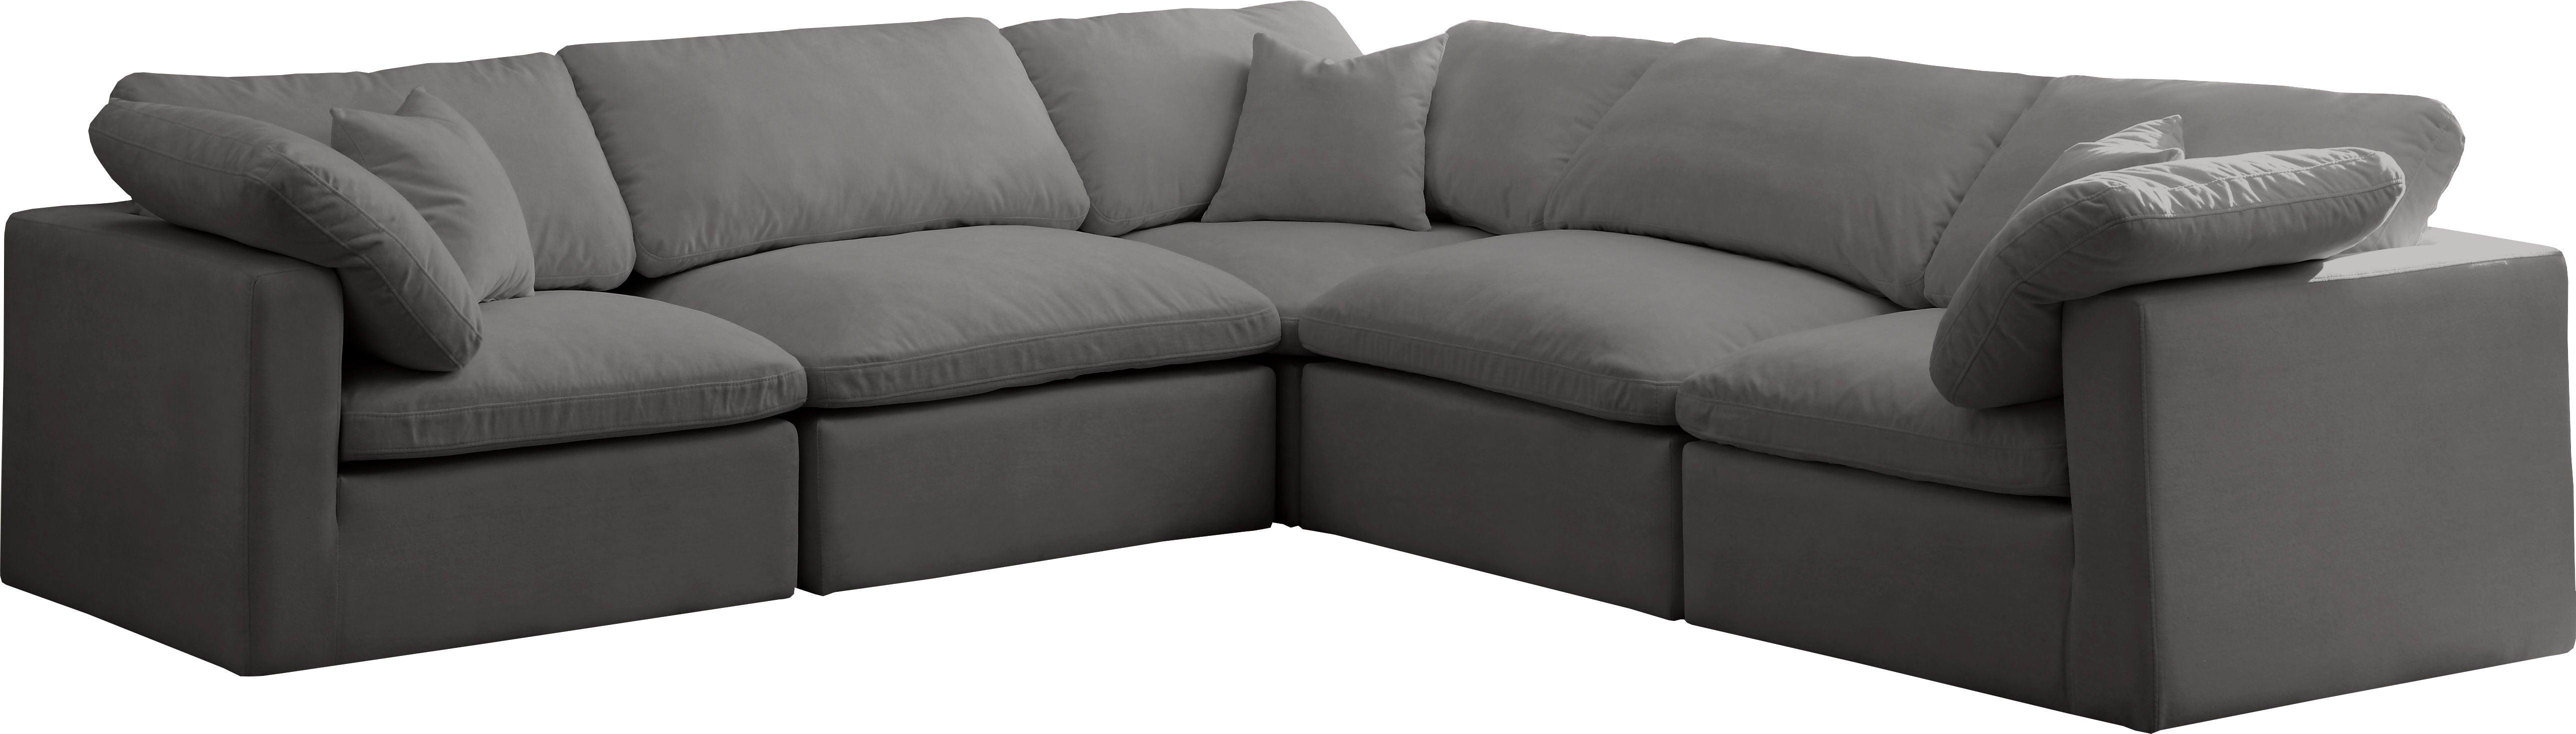 Meridian Furniture - Plush - Velvet Standart Comfort 5 Piece Modular Sectional - Grey - 5th Avenue Furniture